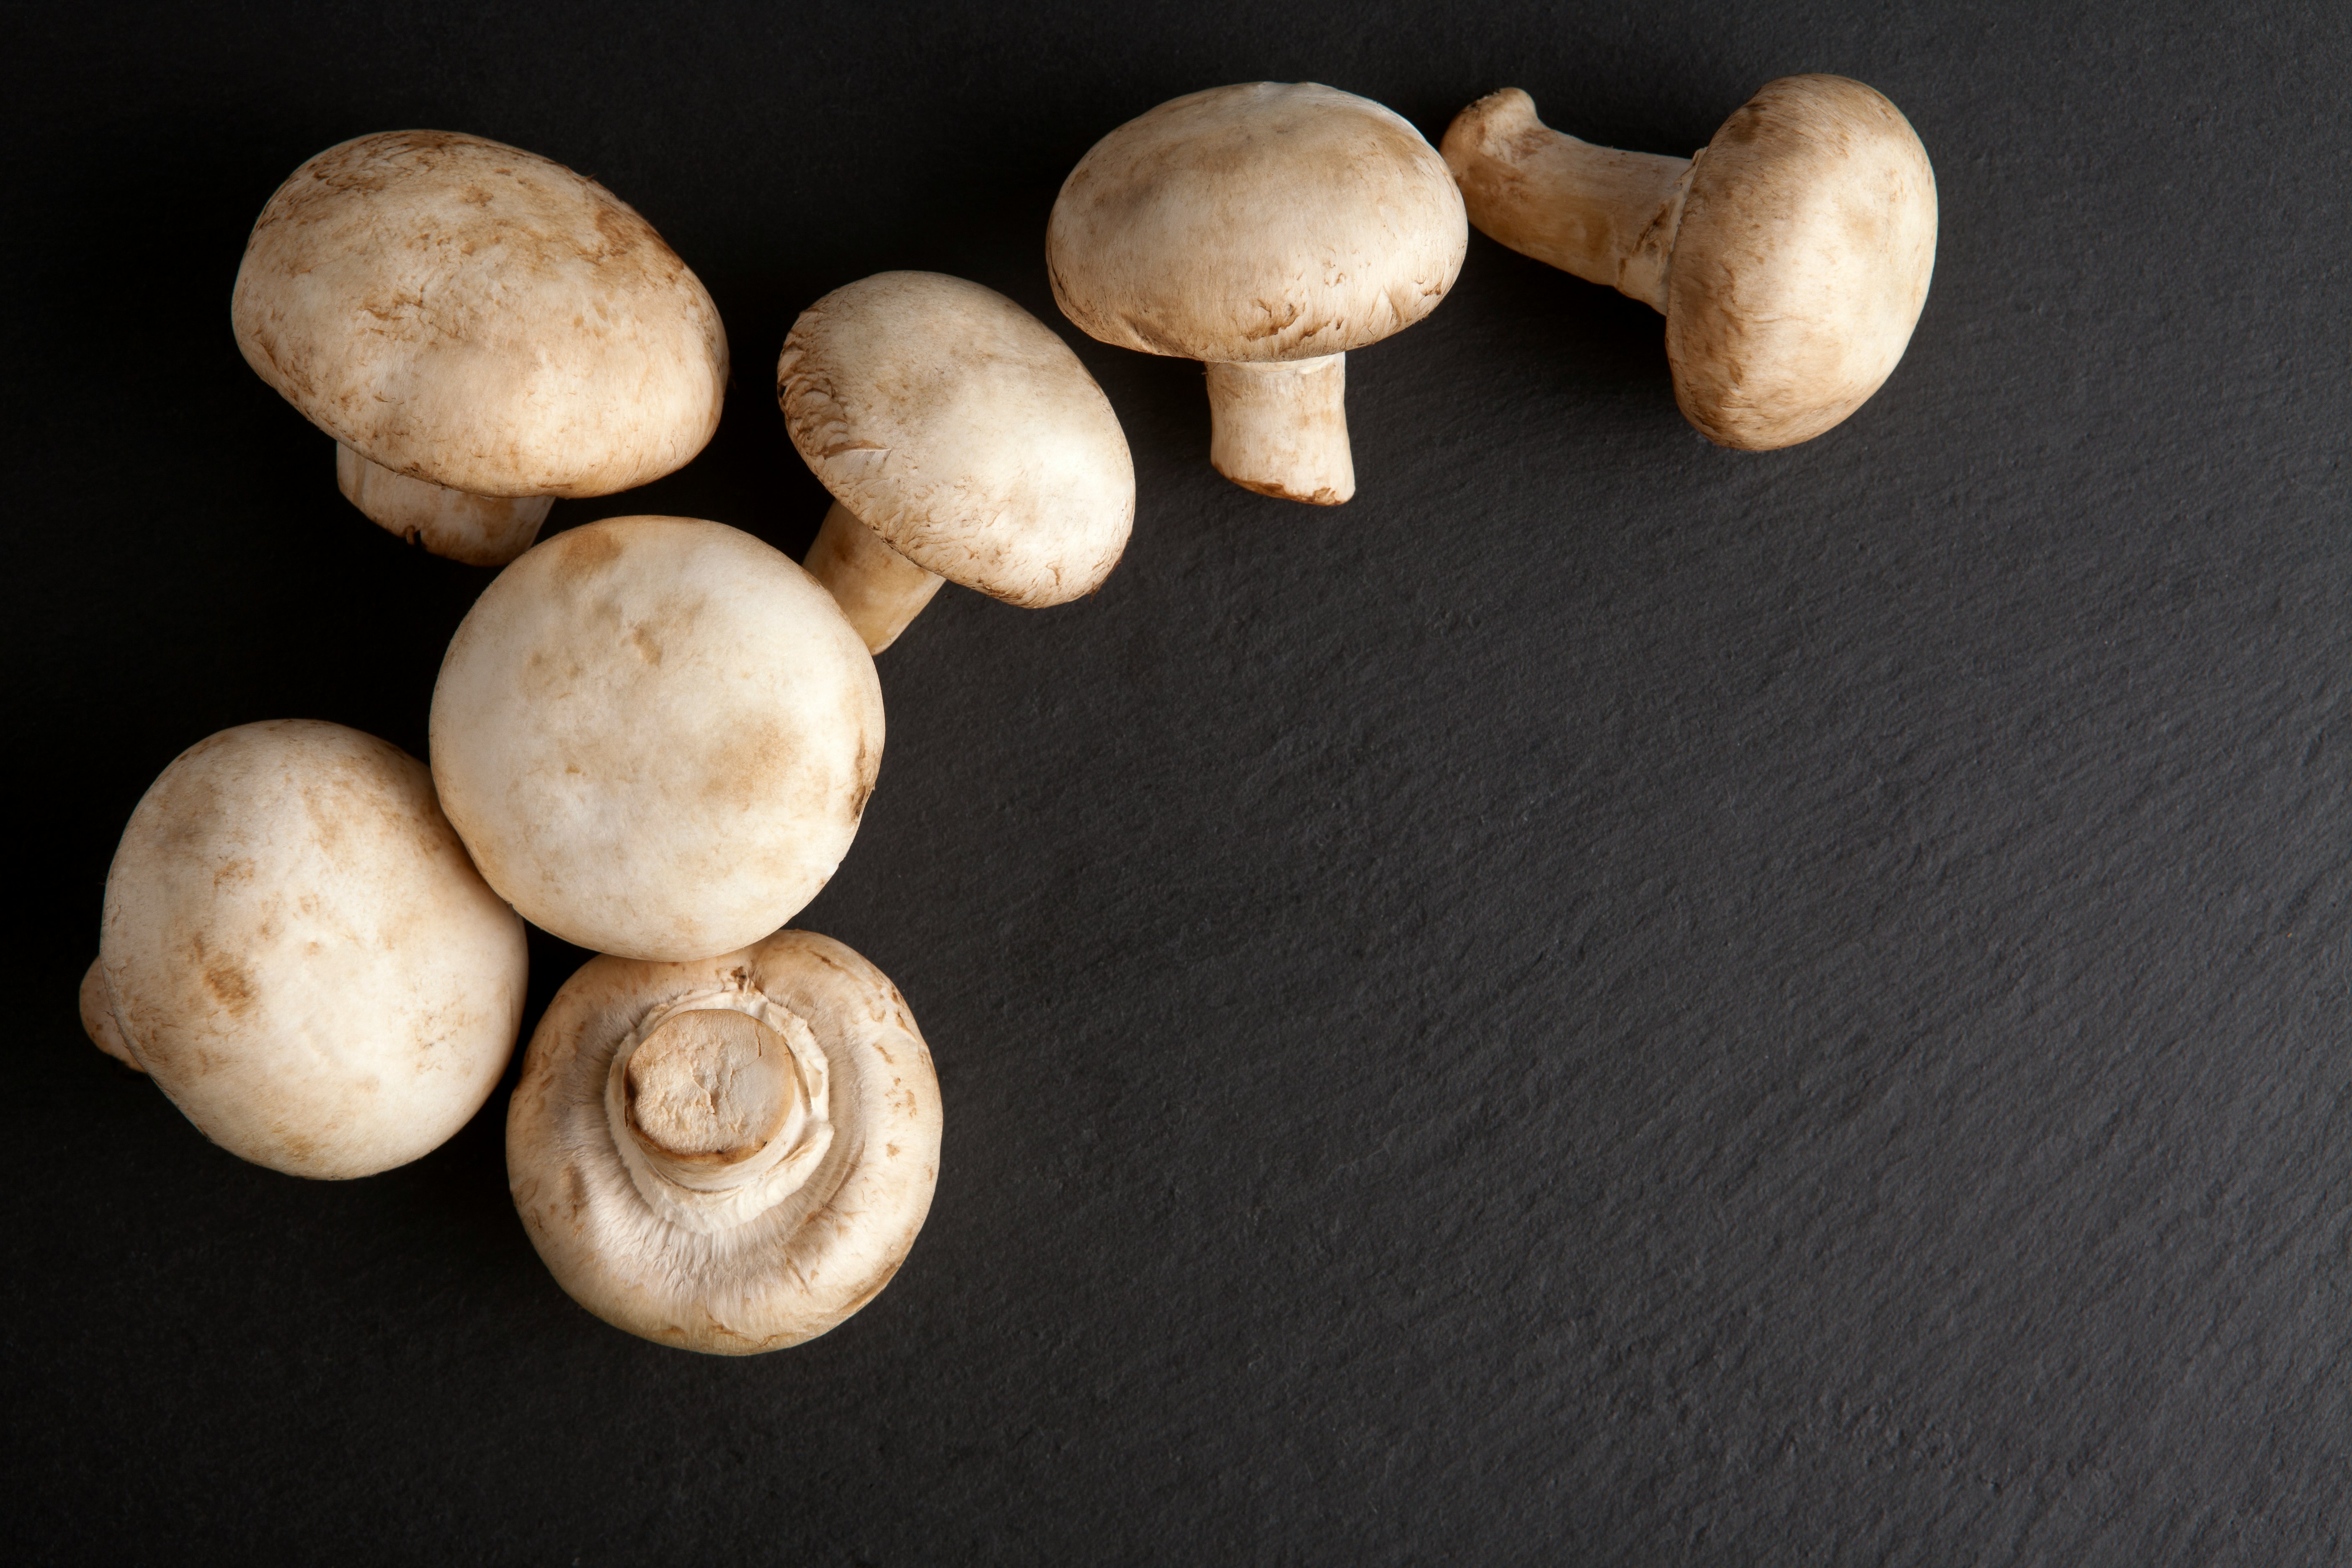 white mushrooms on black textile